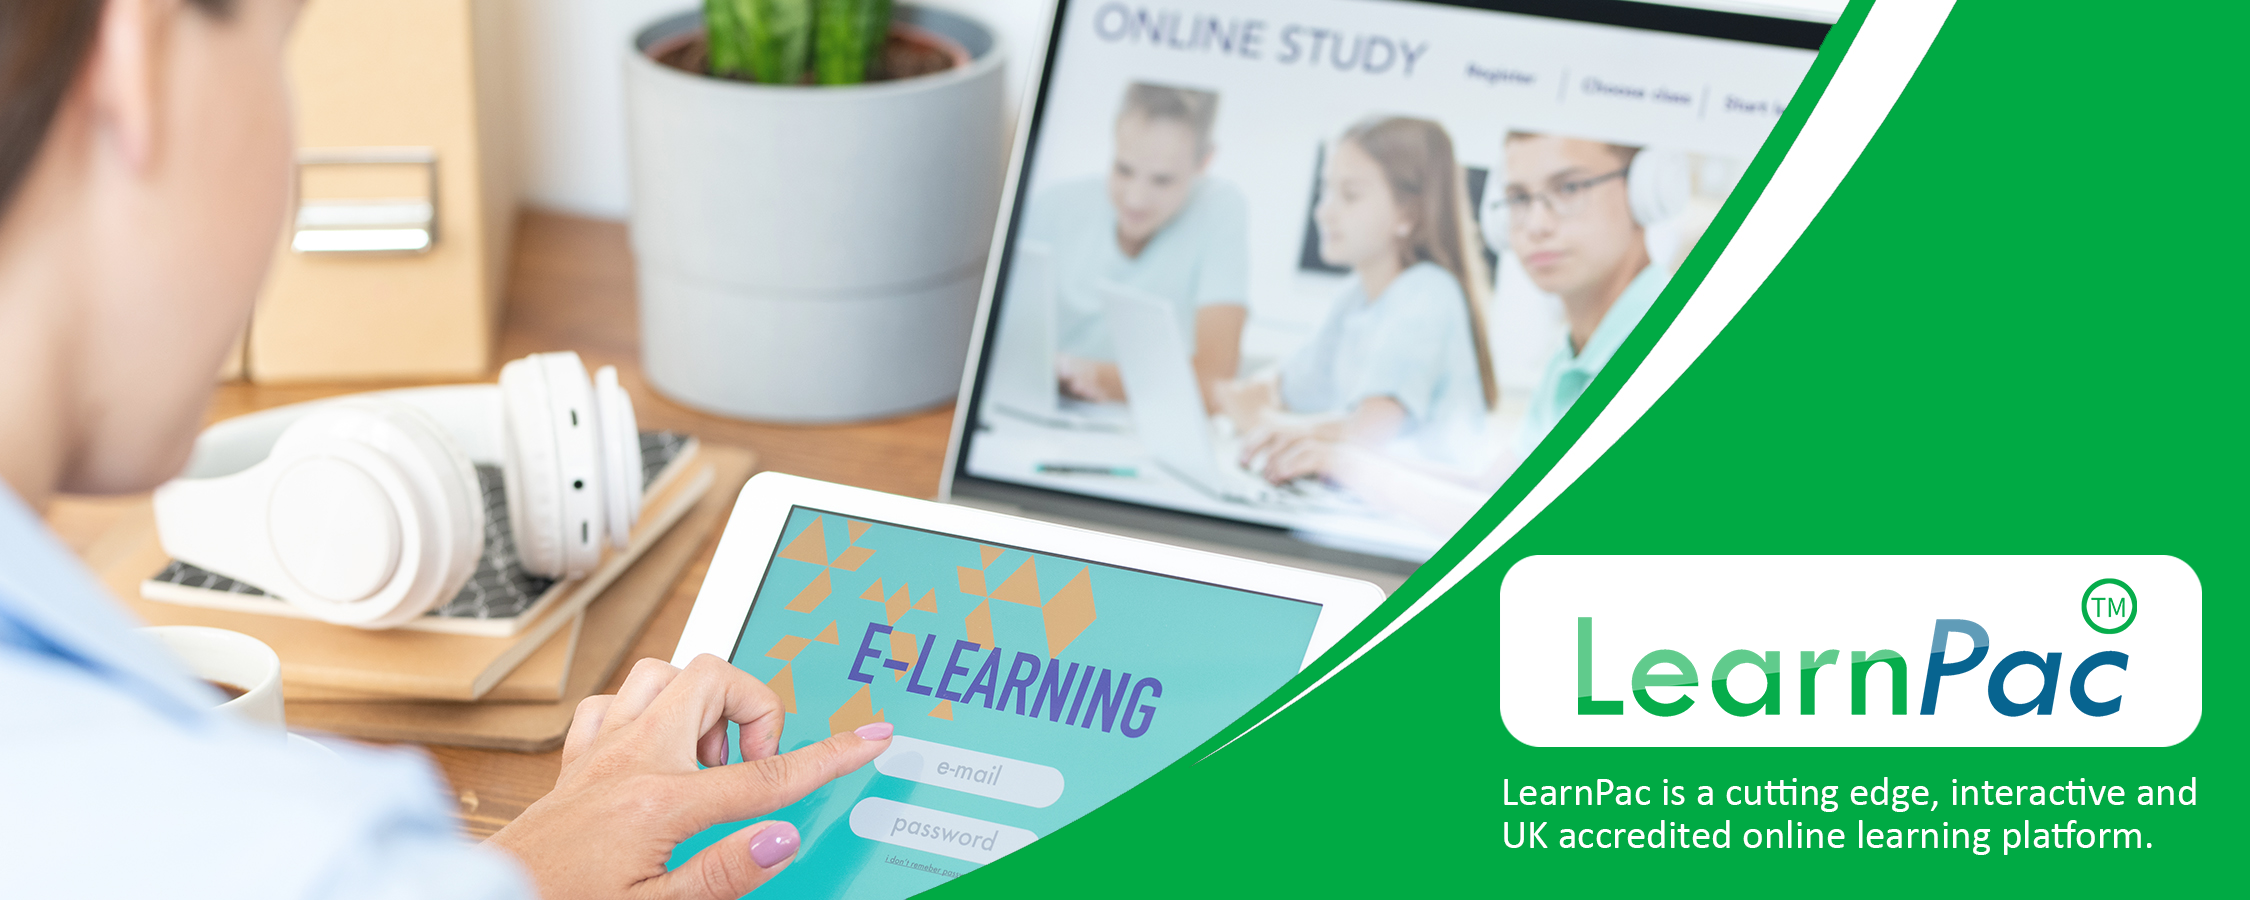 Top 10 Sales Secrets Training - Online Learning Courses - E-Learning Courses - LearnPac Systems UK -